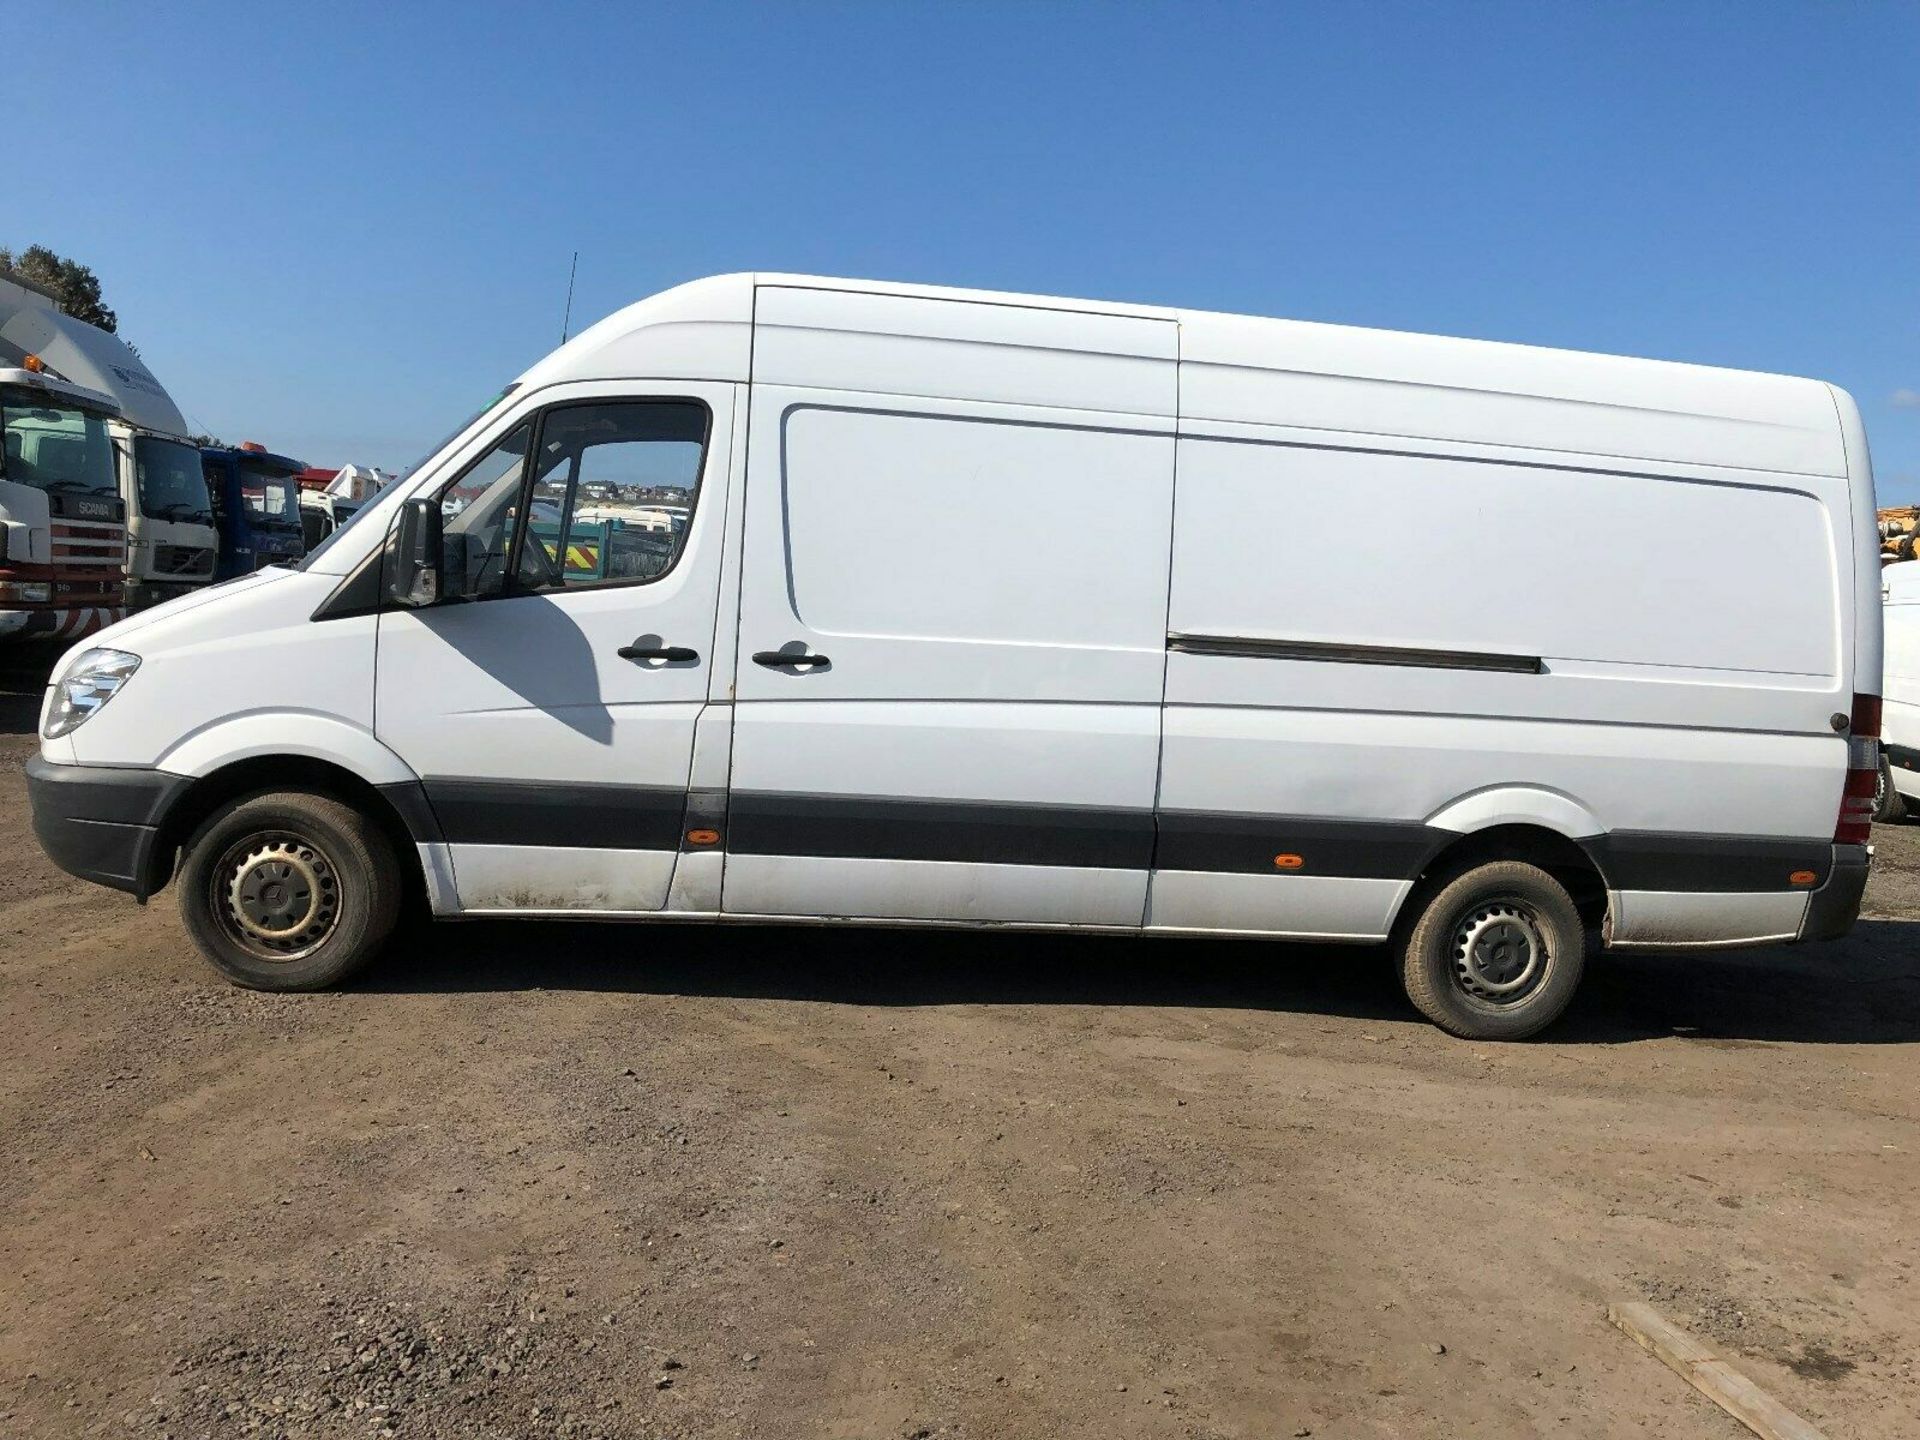 Merdeceds Sprinter 313CDI Long Wheelbase Van - Image 3 of 5